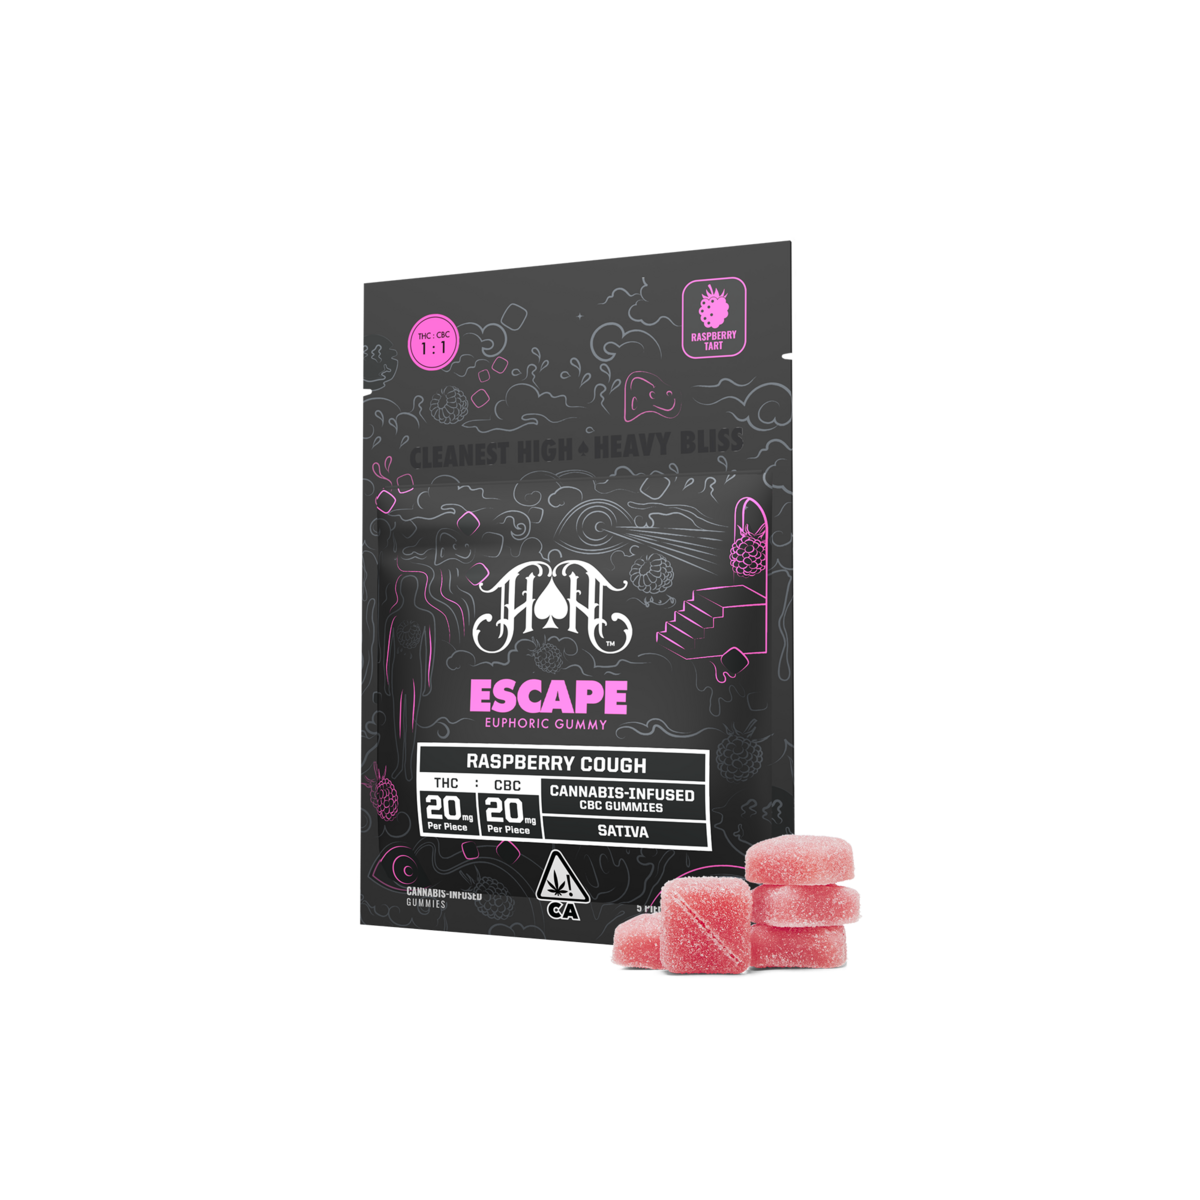 Raspberry Cough | Sativa - Escape RCS CBC Euphoric Gummy